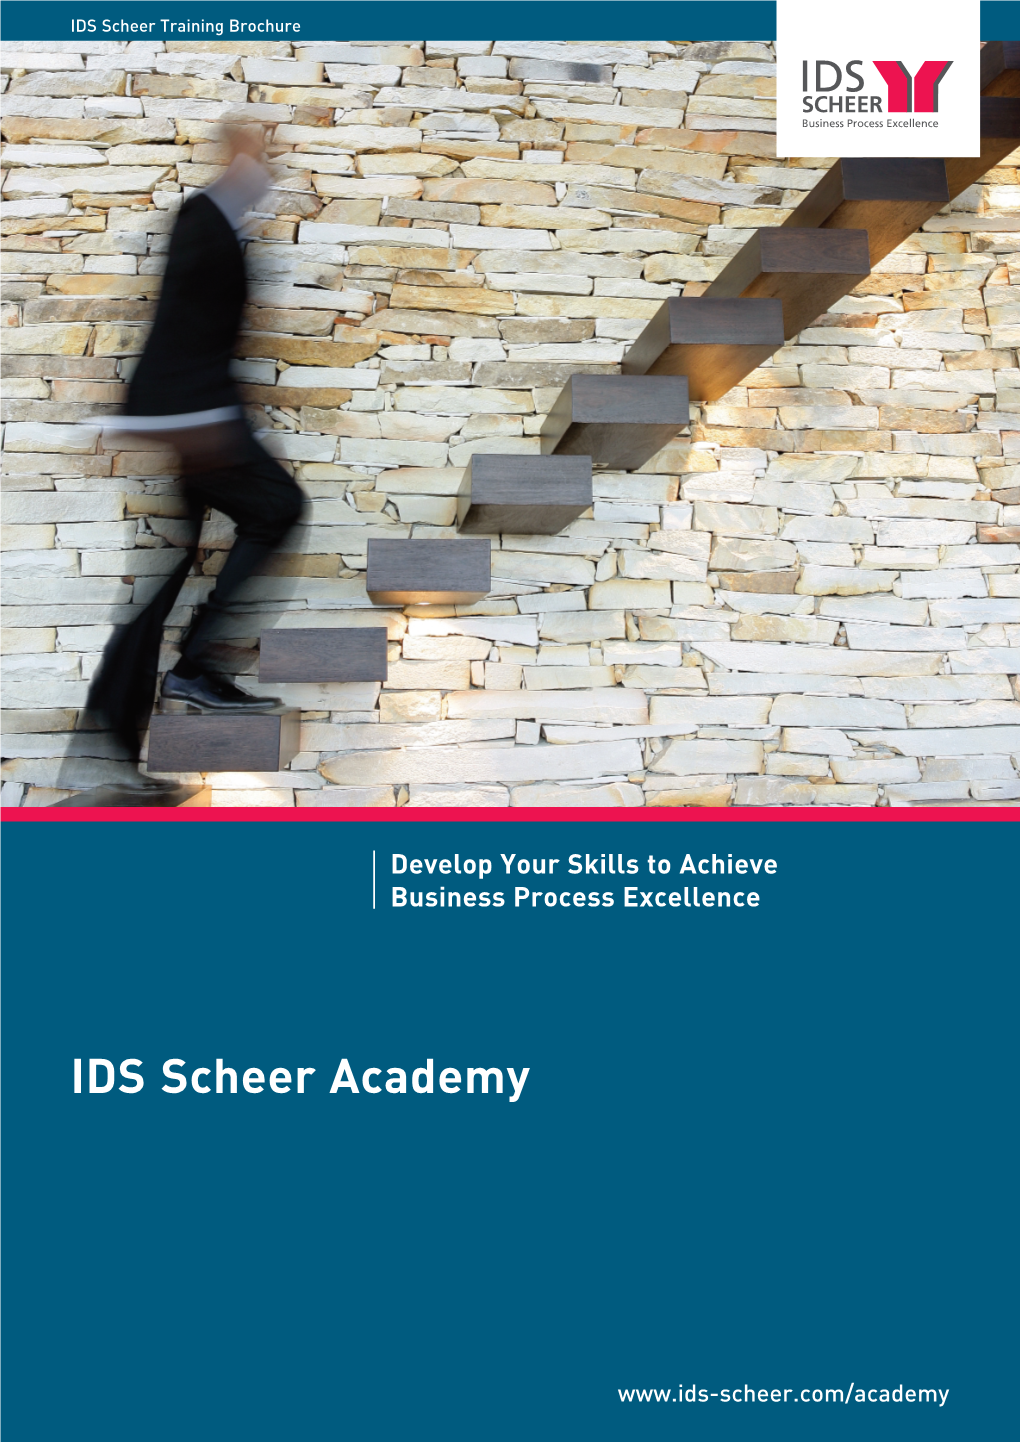 IDS Scheer Academy